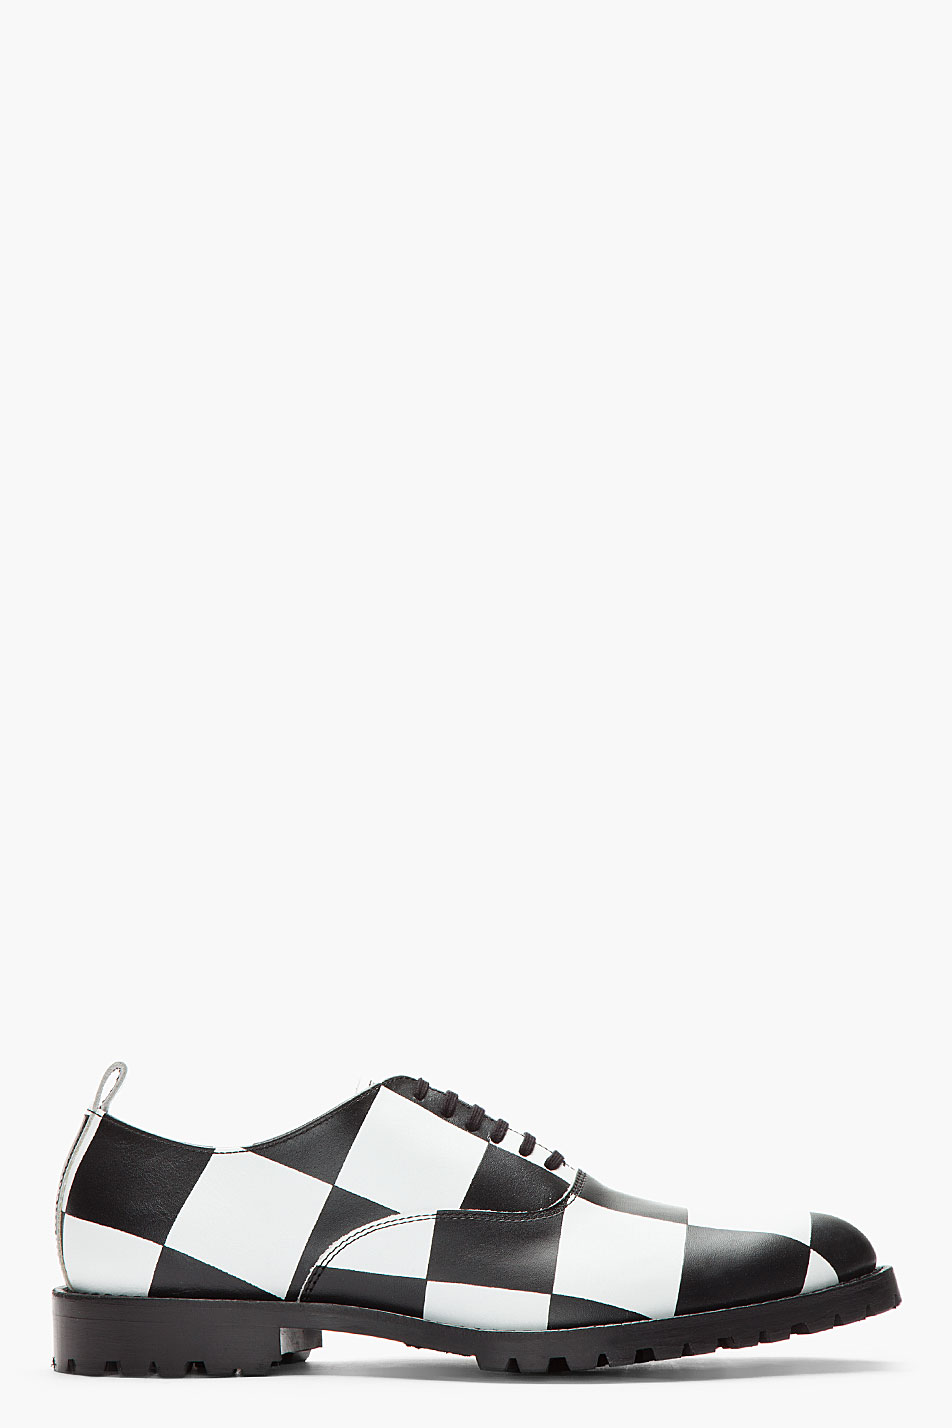 Comme des Garçons Black White Checkerboard Leather Oxfords for Men - Lyst